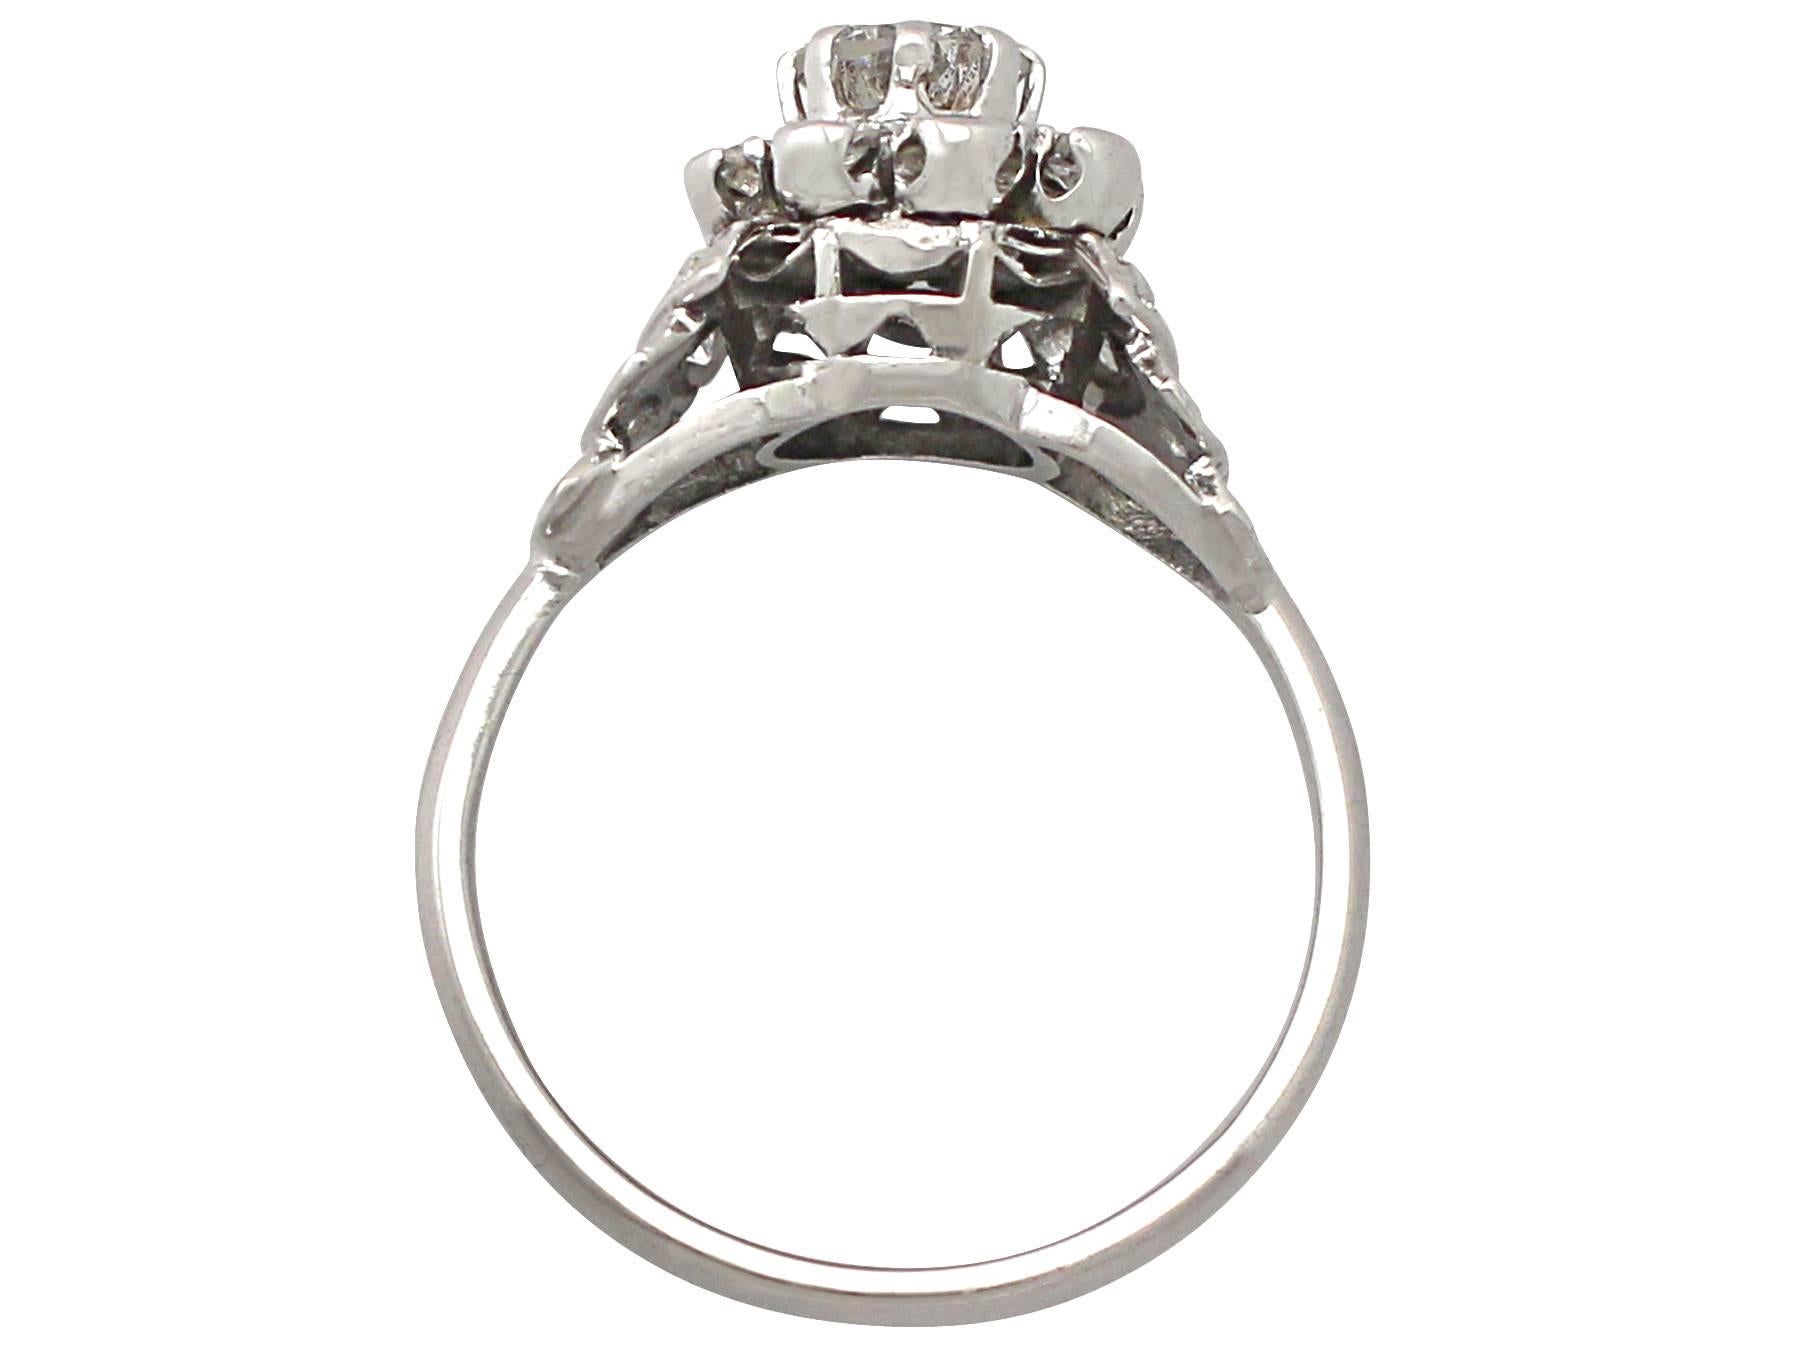 Women's 1950s Diamond and Platinum Cocktail Ring